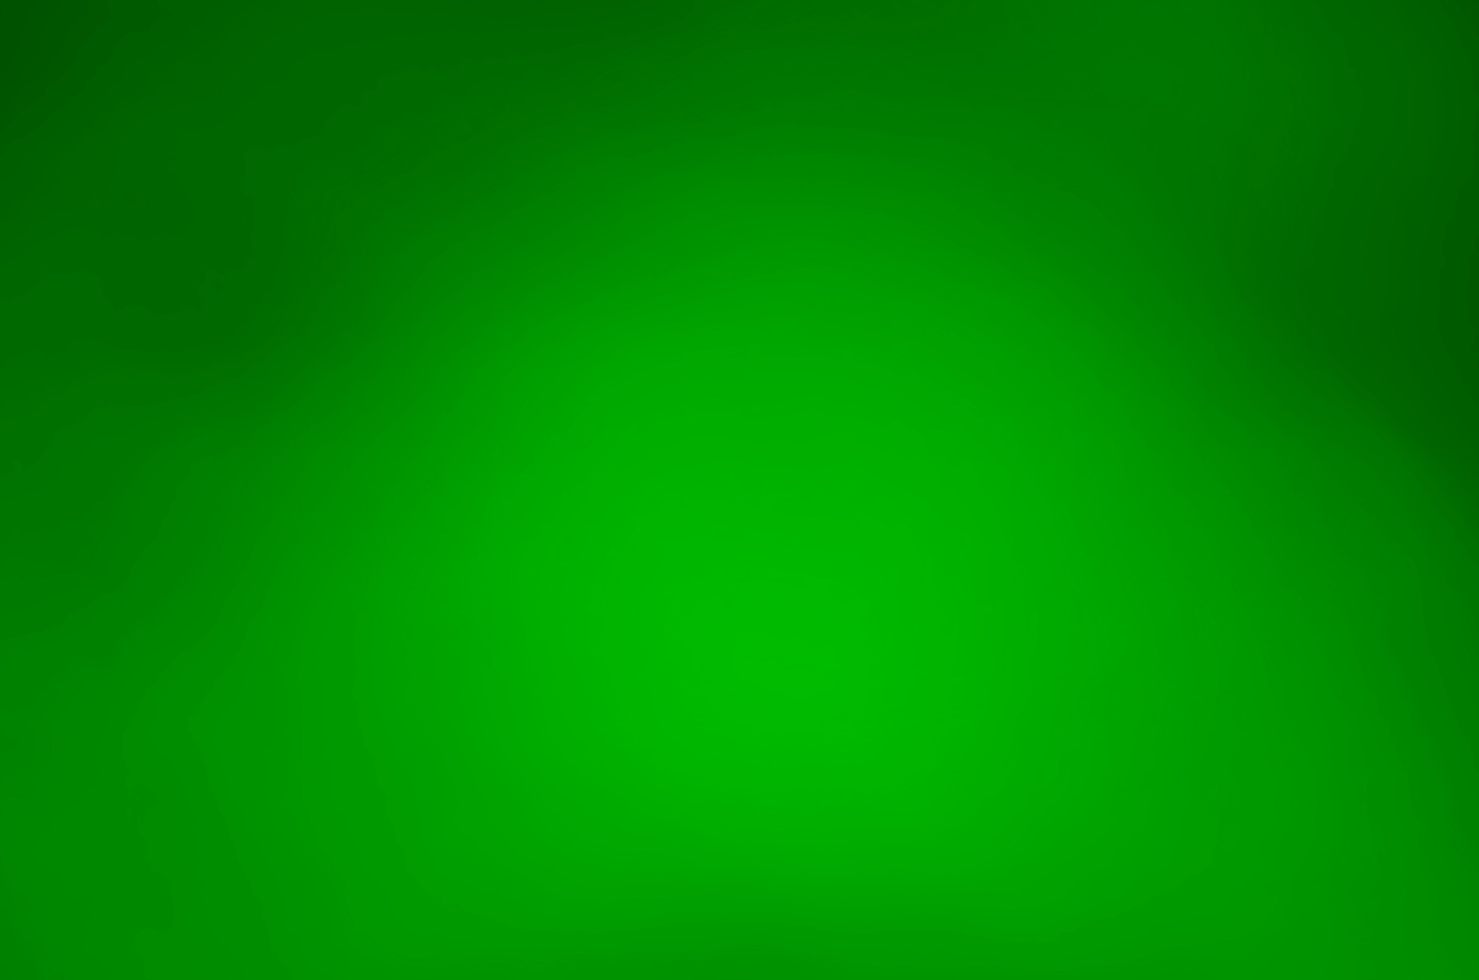 Background texture green